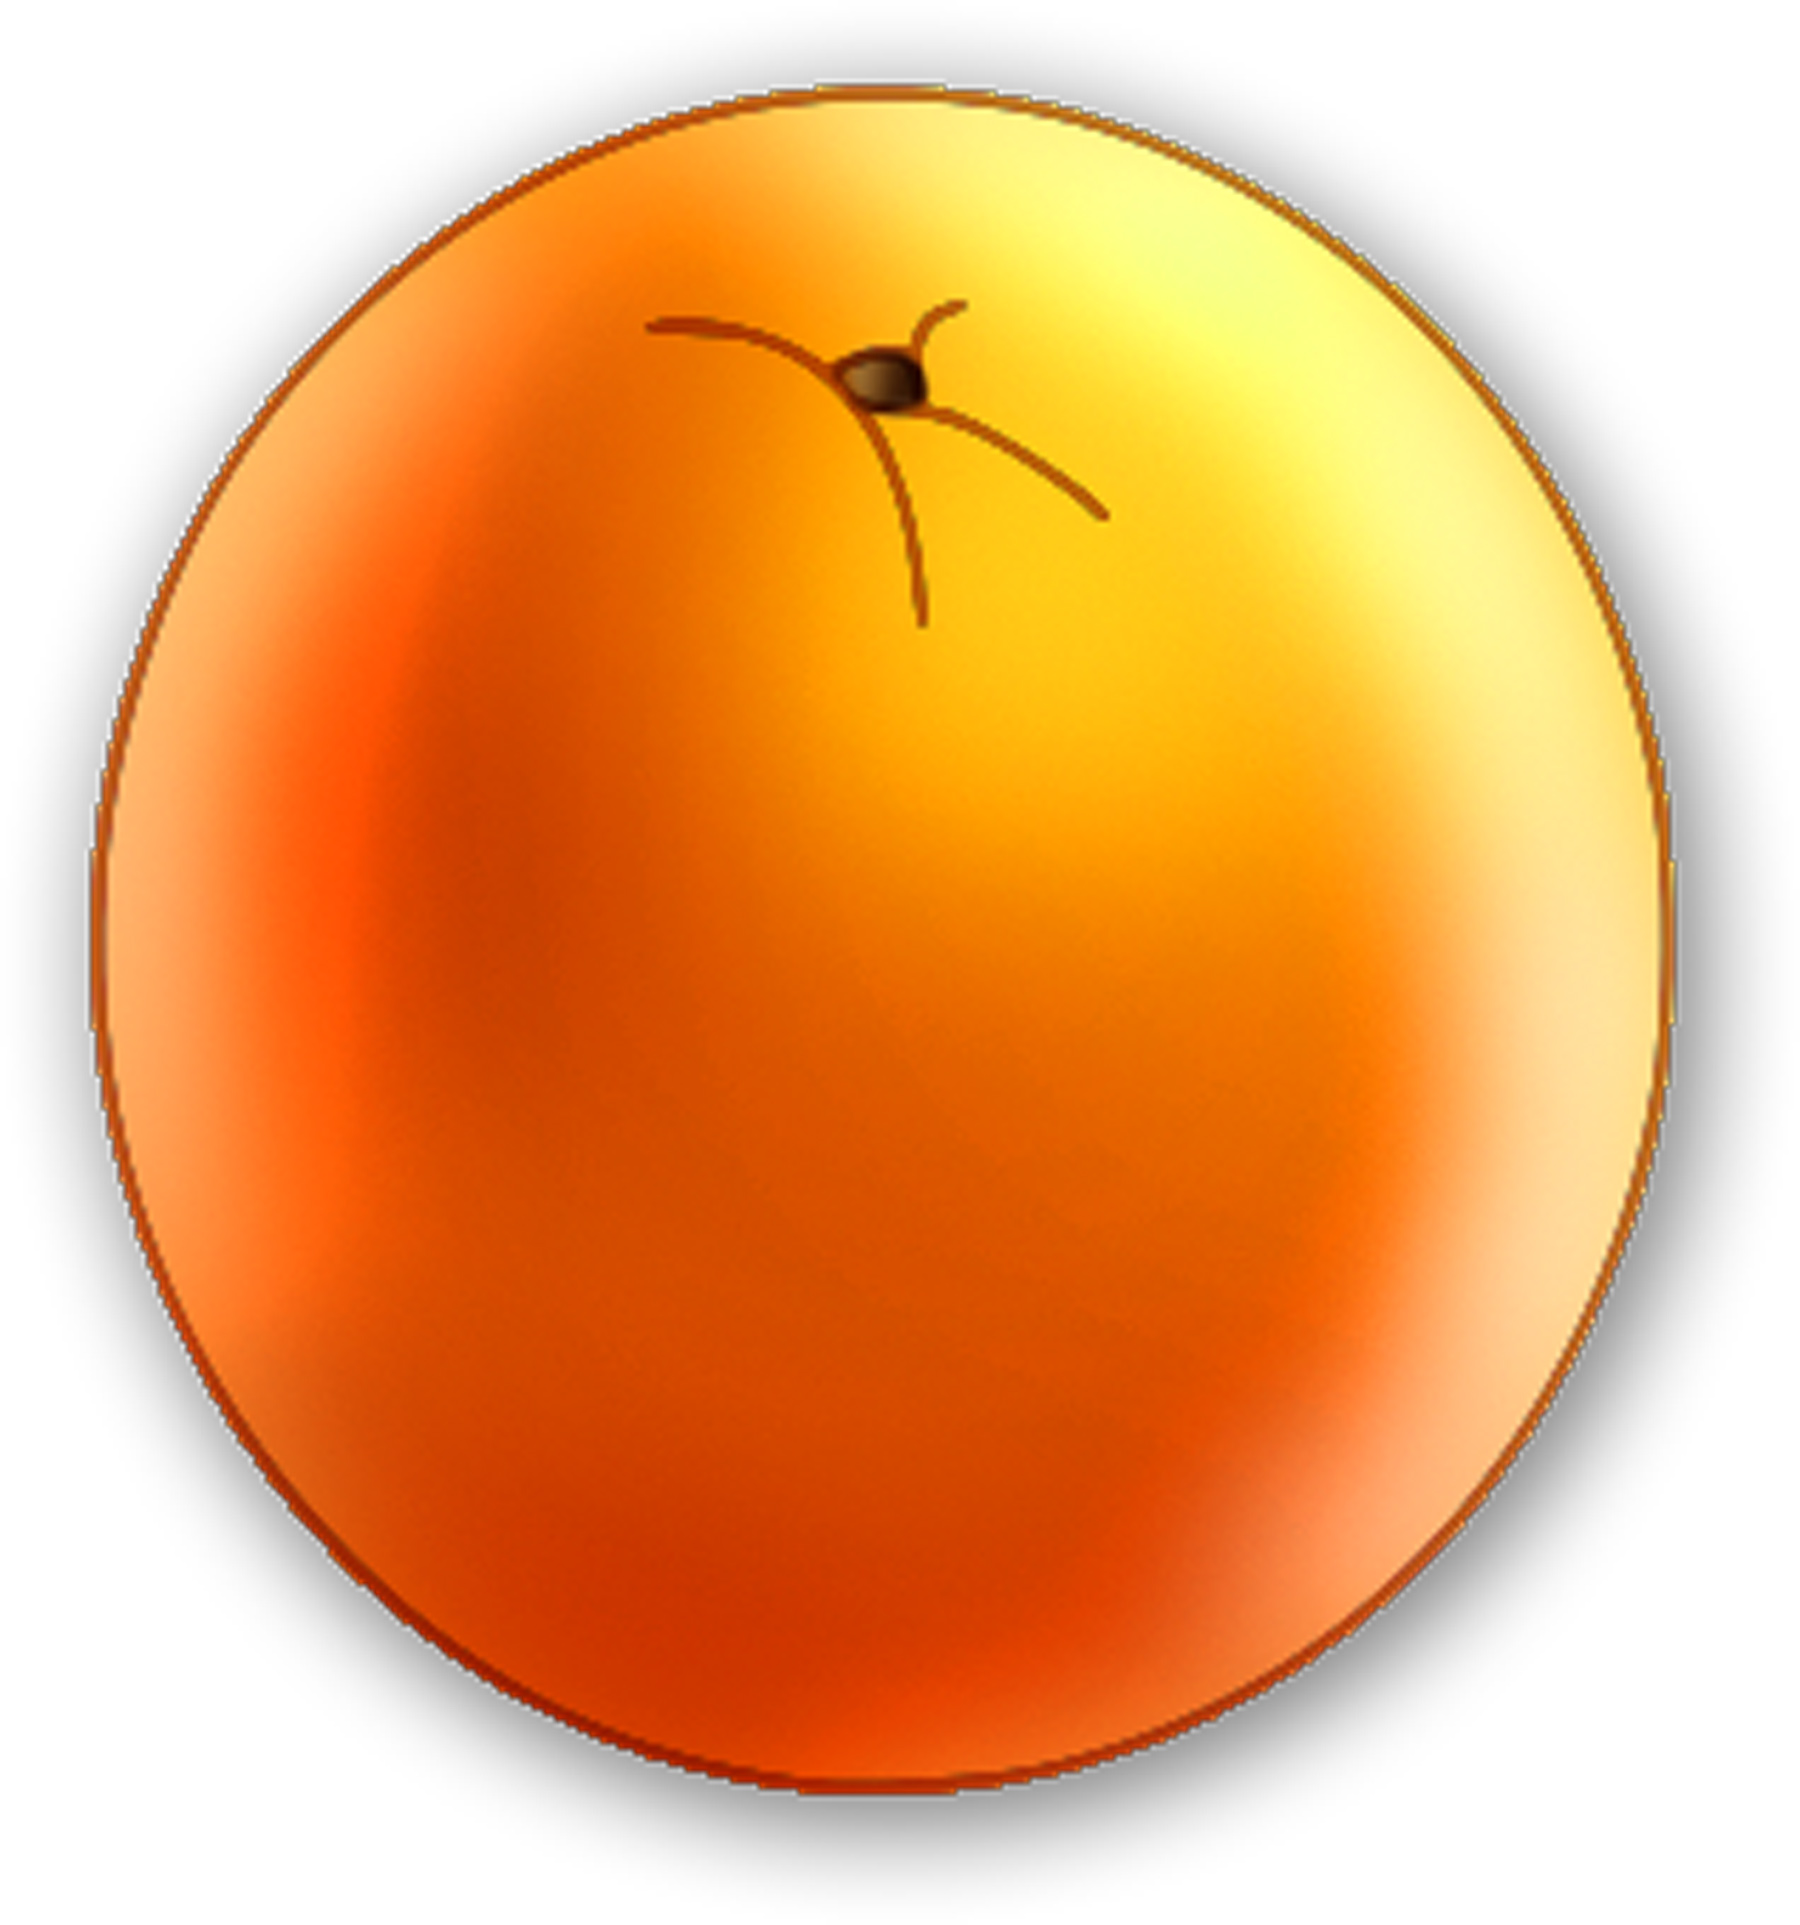 Free Fruit Orange Cliparts Download Free Fruit Orange Cliparts Png